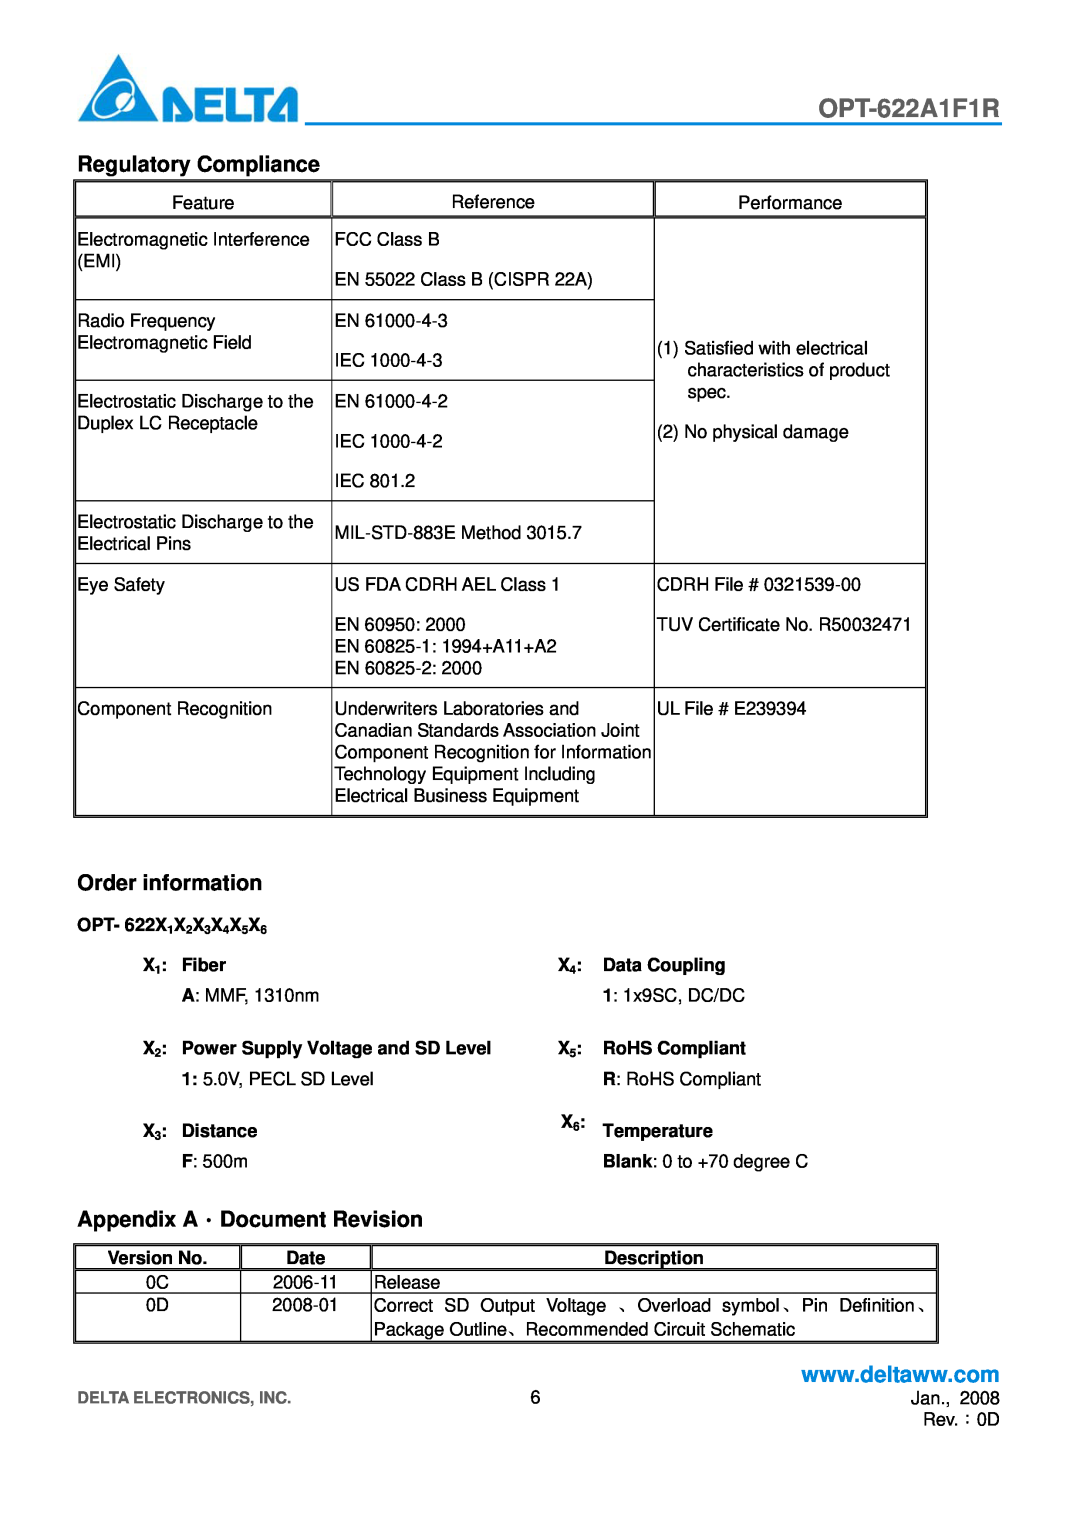 Delta Electronics OPT-622A1F1R manual Regulatory Compliance, Order information, Appendix A．Document Revision 